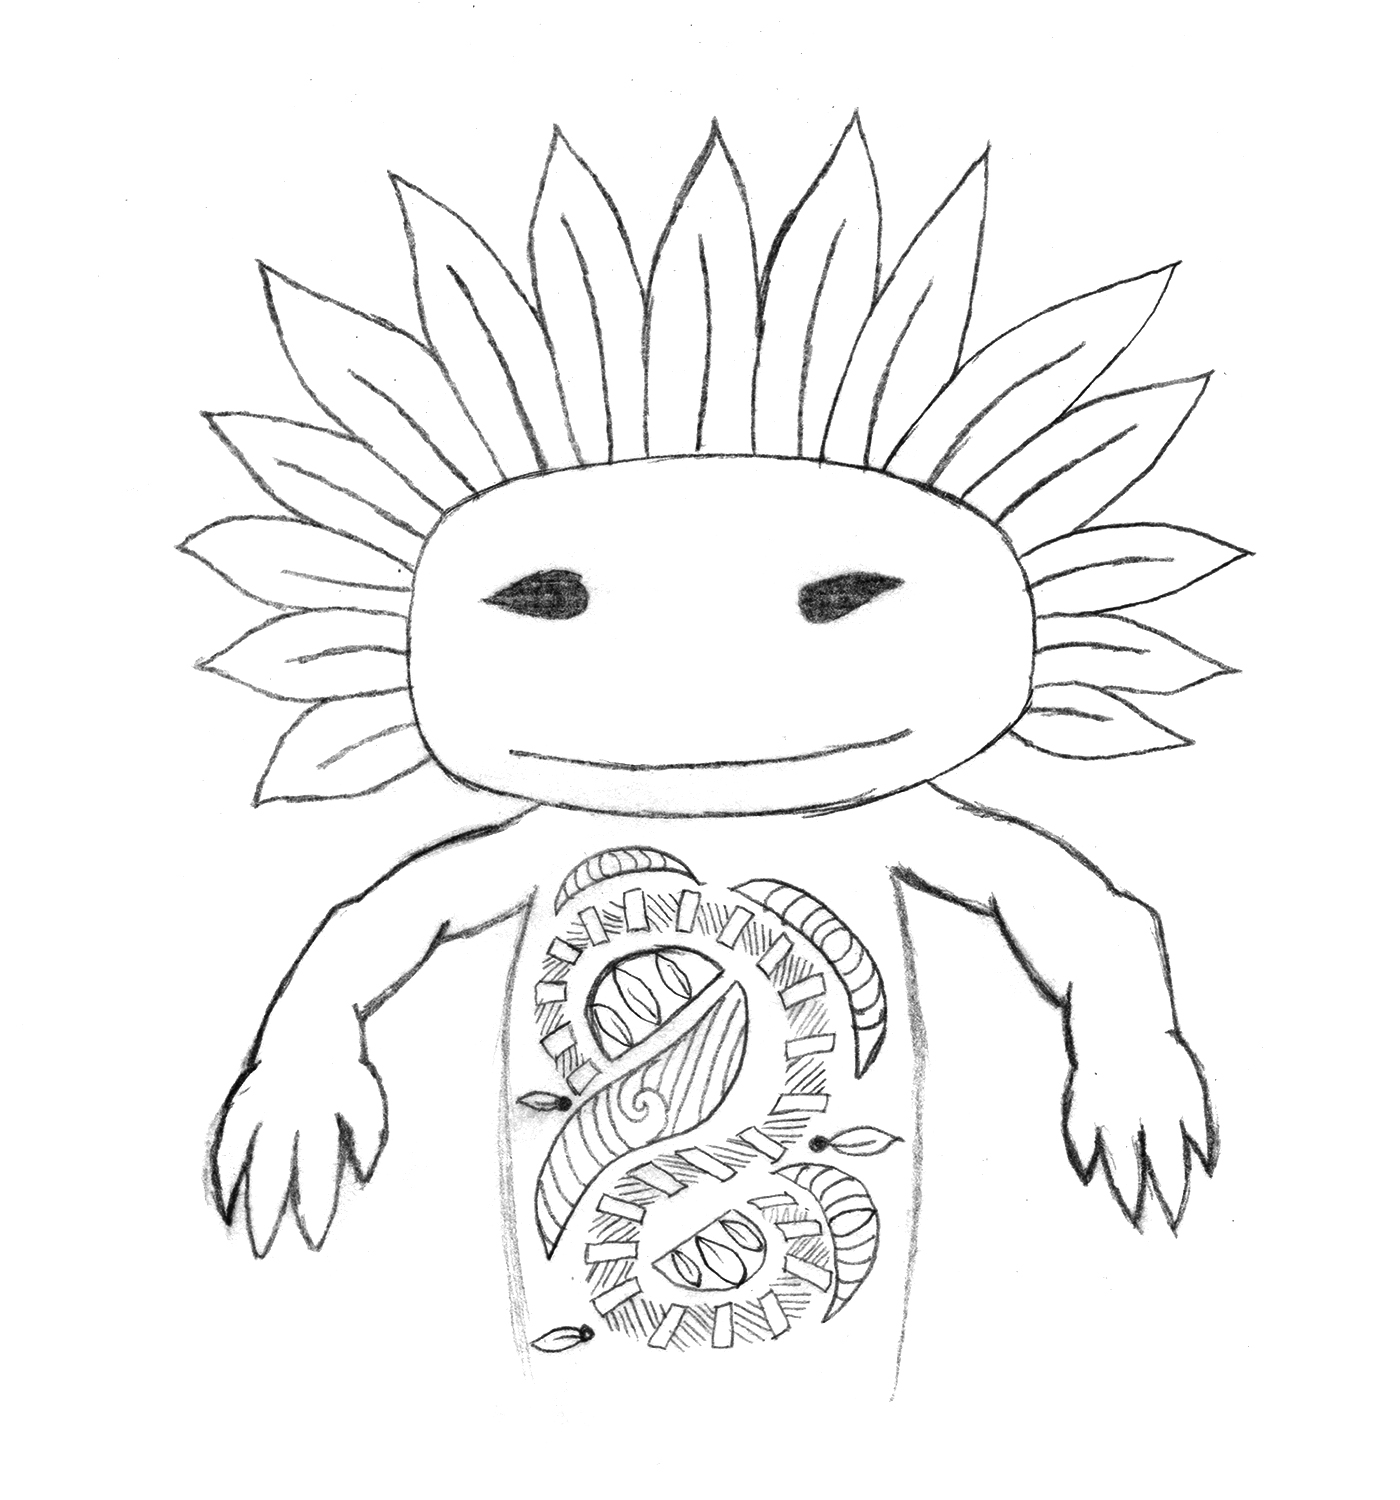 Axolotl_sketch1